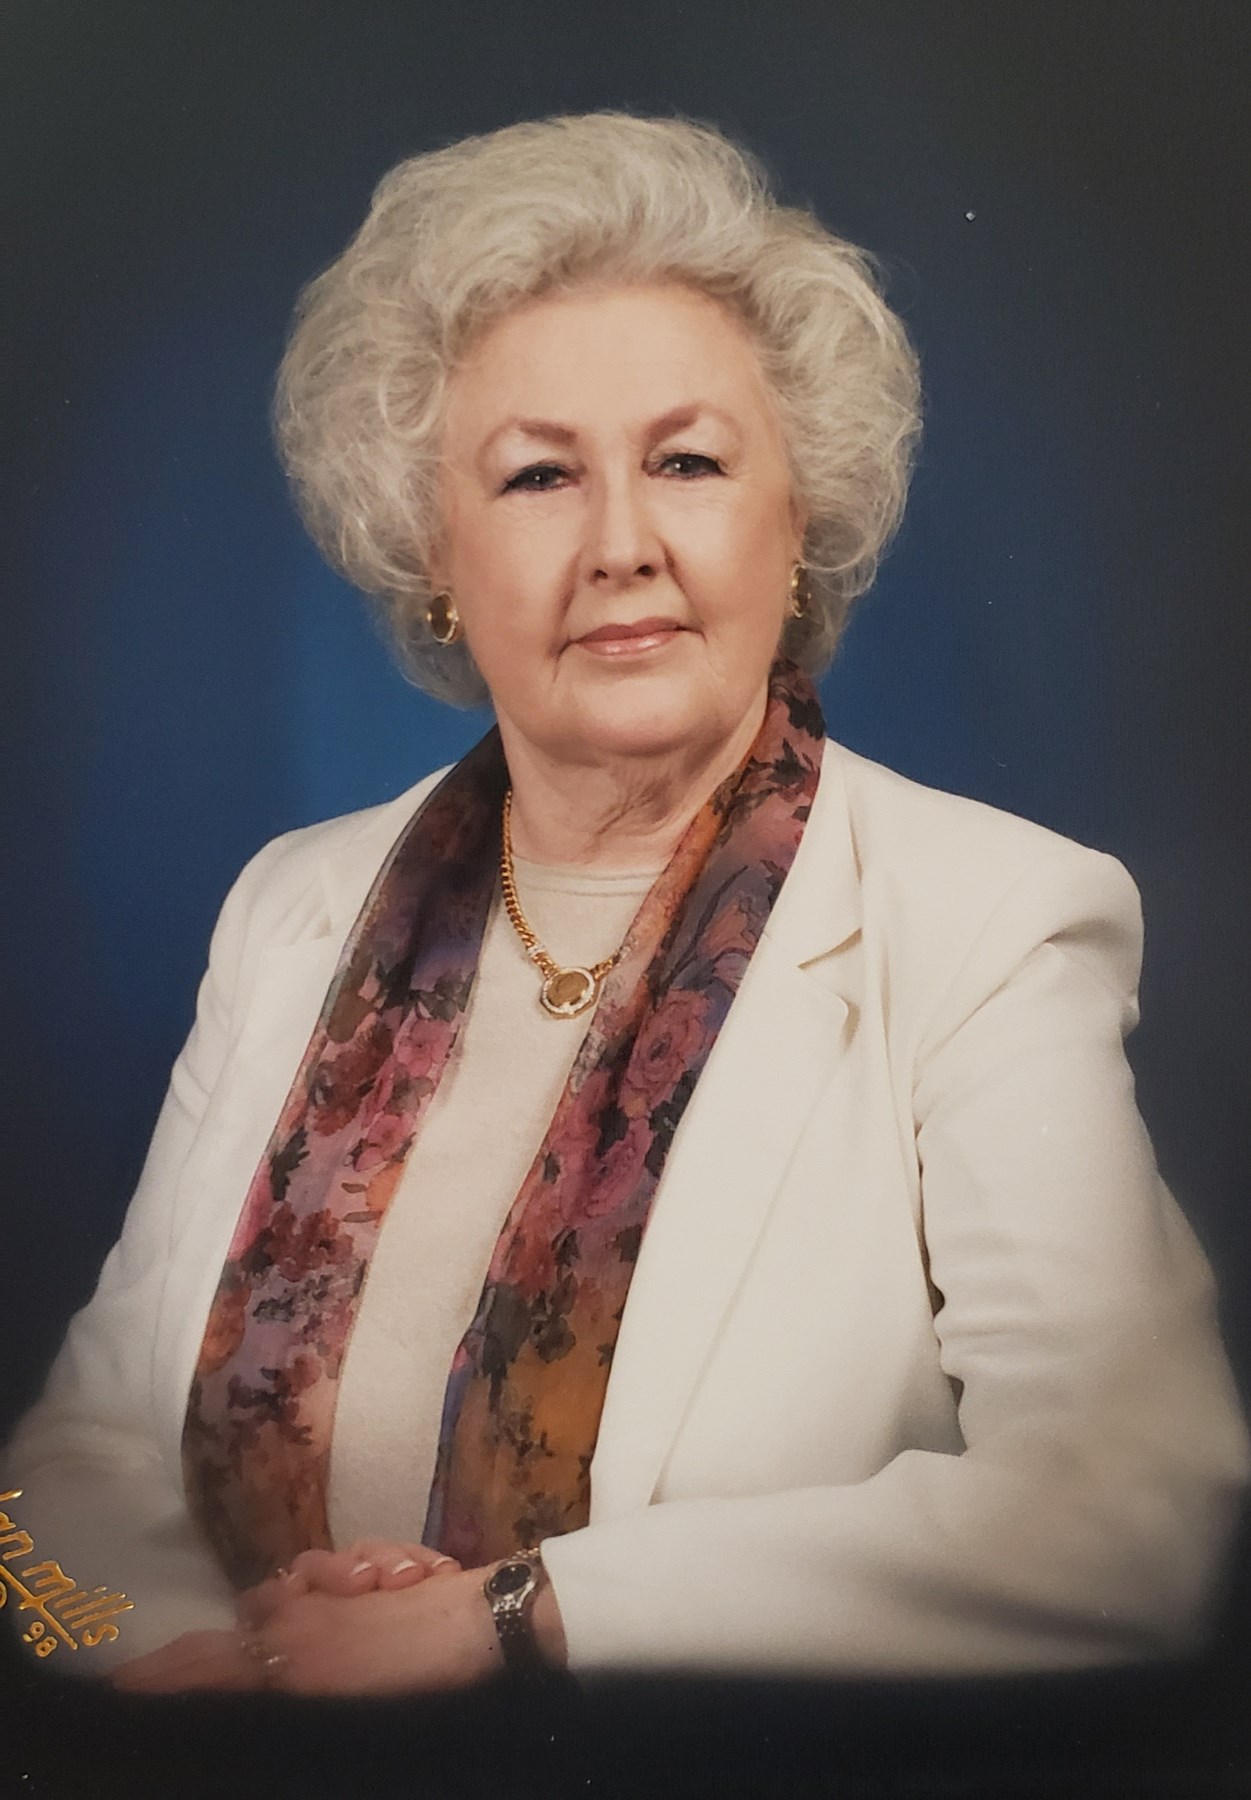 Obituary of Dorothy Jean Moncrief Trevathan - 16/01/2020 - De la famille